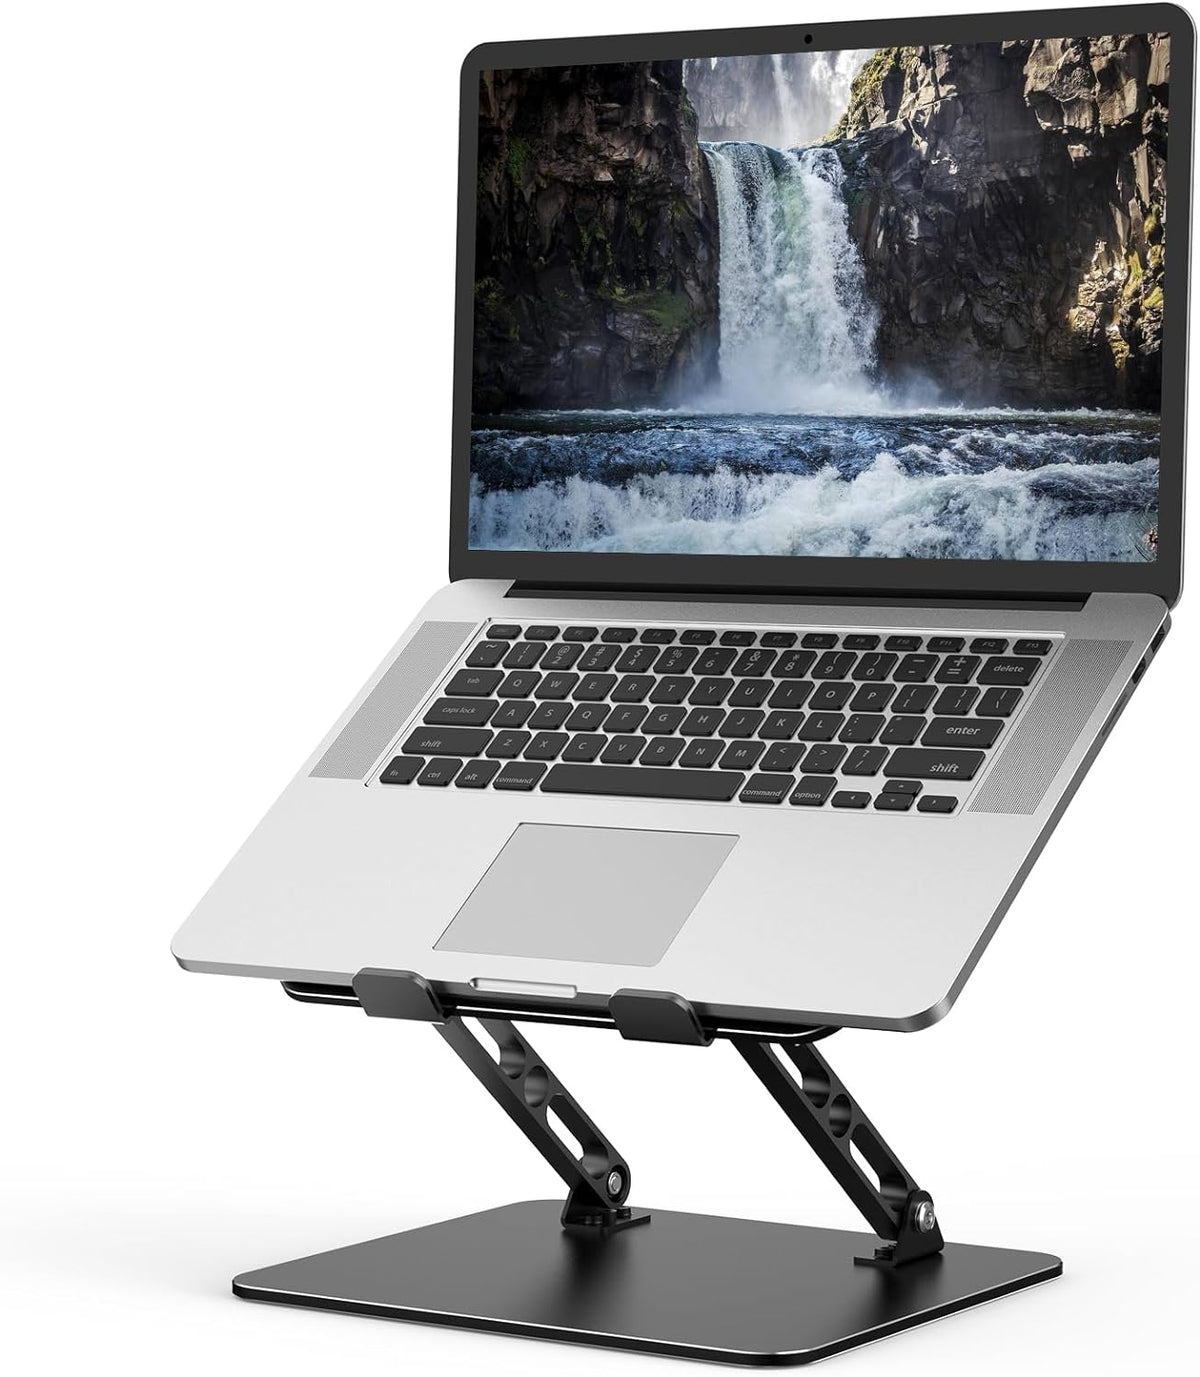 Adjustable Laptop Stand for Desk, Metal Foldable Laptop Riser, Portable Laptop Holder Mount, Ventilated Cooling Computer Notebook Stand Compatible with 10-15.6” Laptops